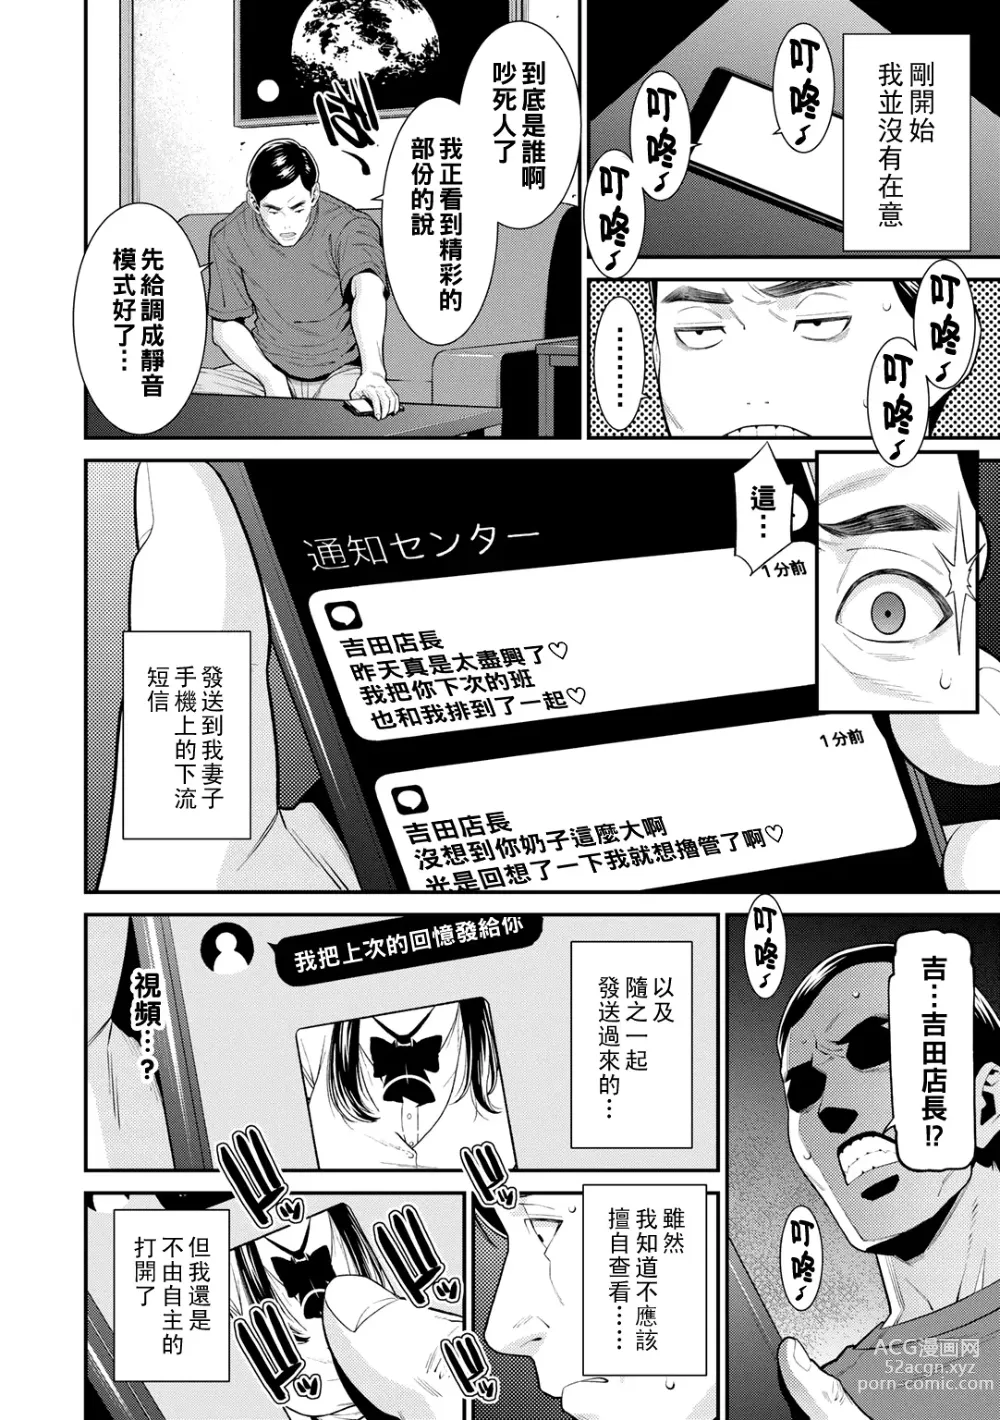 Page 11 of manga Onna ni Kagi wa Kakerarenai